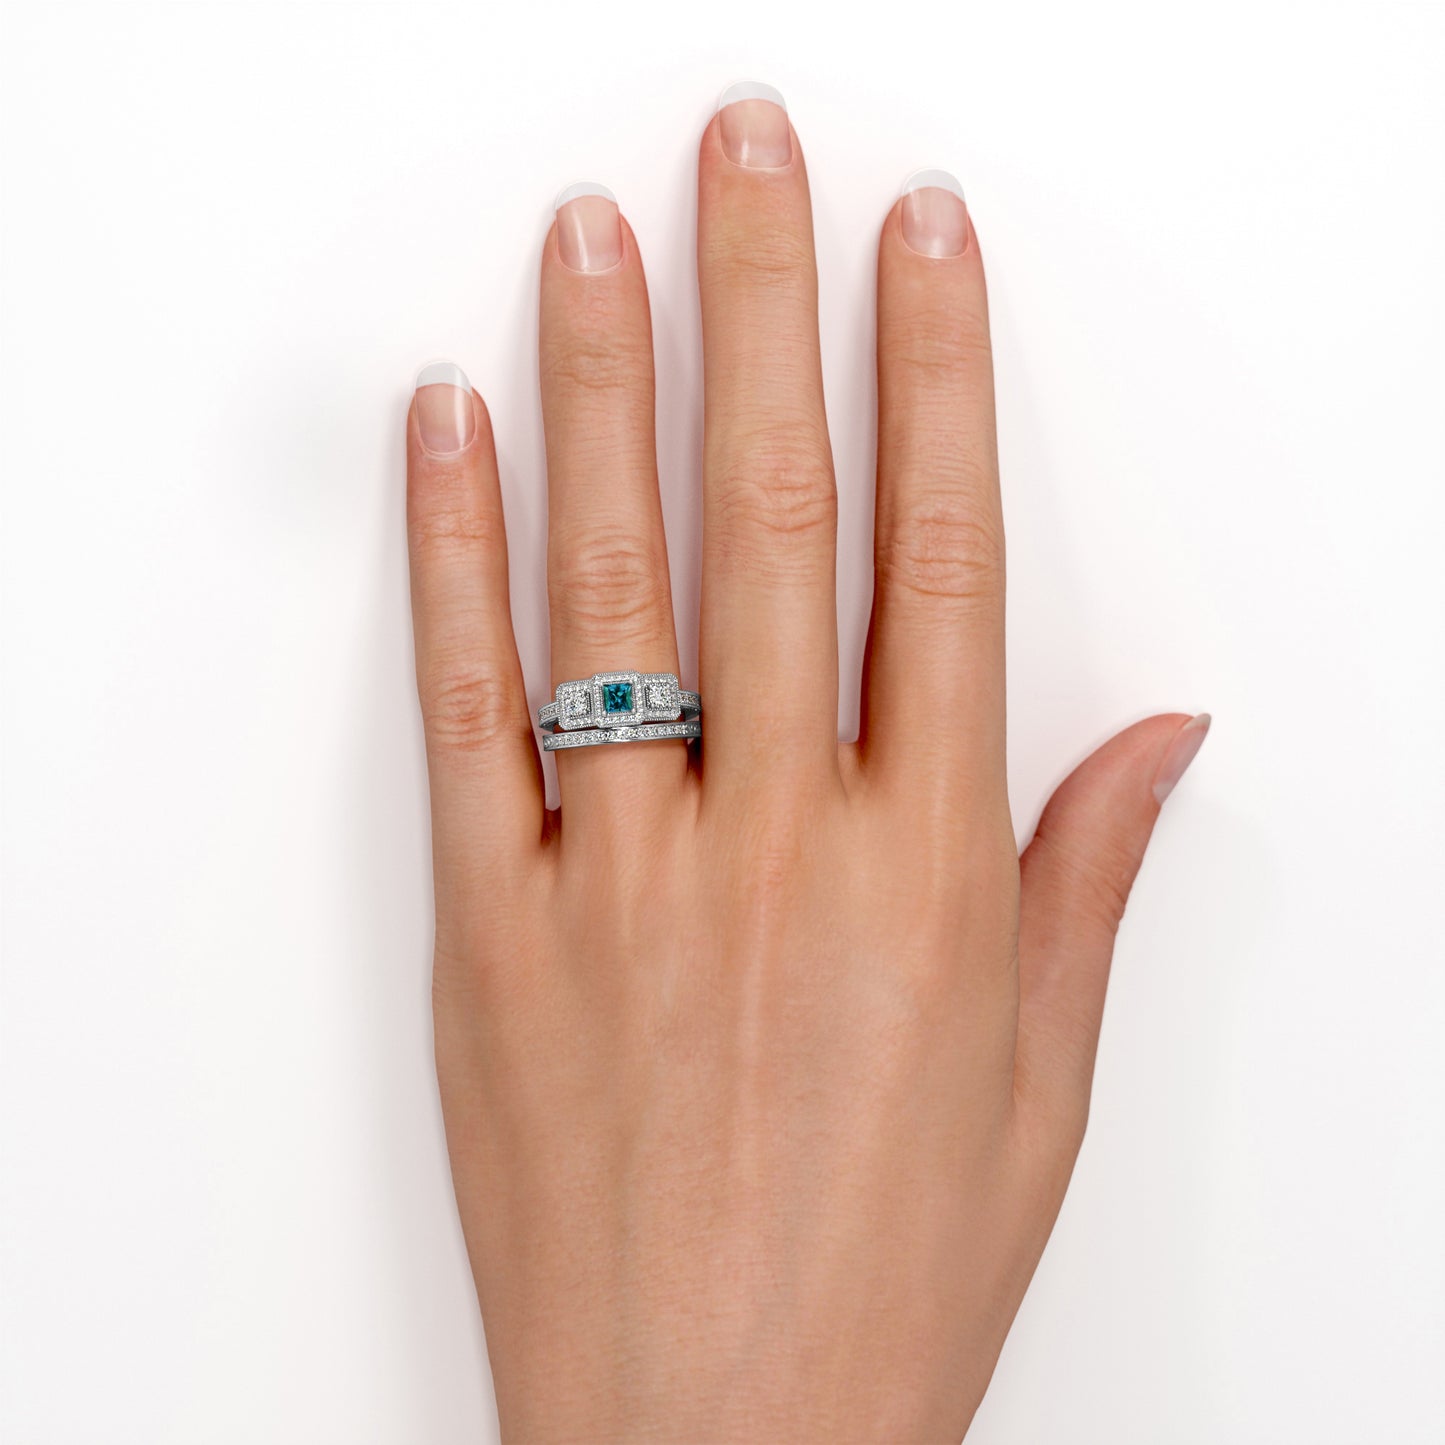 Eccentric 1.75 carat Princess cut Alexandrite and diamond triple halo engagement ring with filigree diamond wedding band- Bridal set in White gold